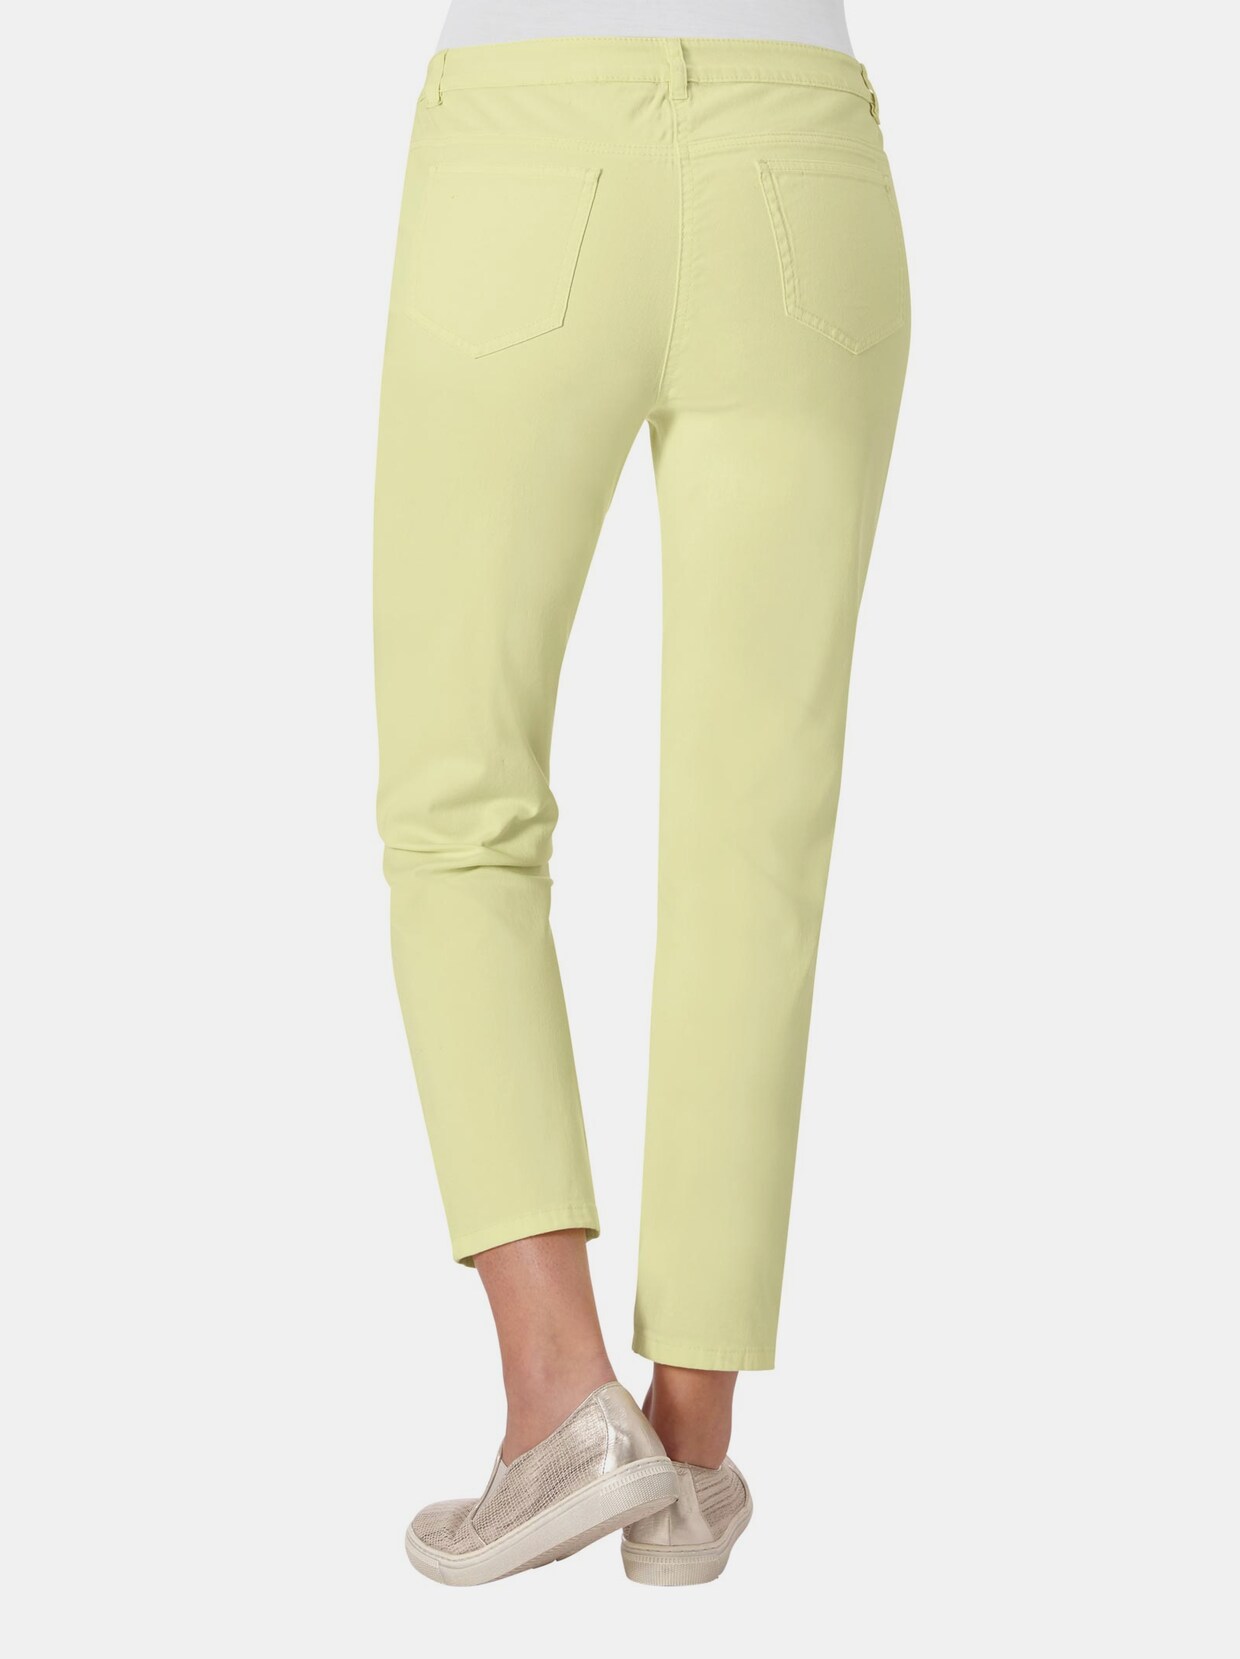 pantalon extensible - jaune